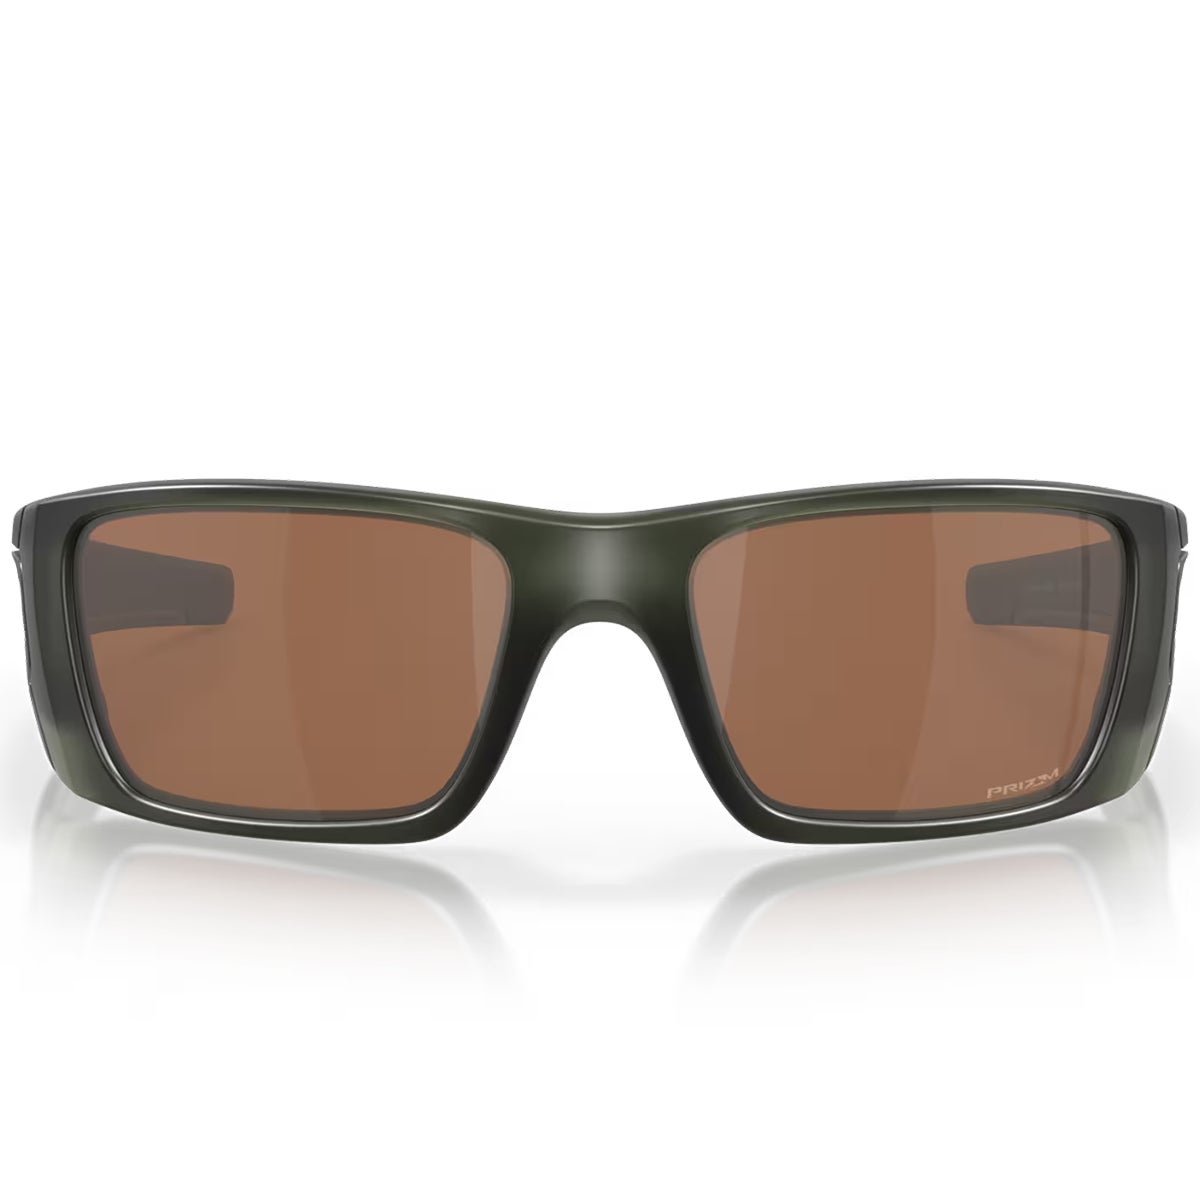 Oakley Fuel Cell Prizm Sunglasses in Matte Olive Ink/Tungsten